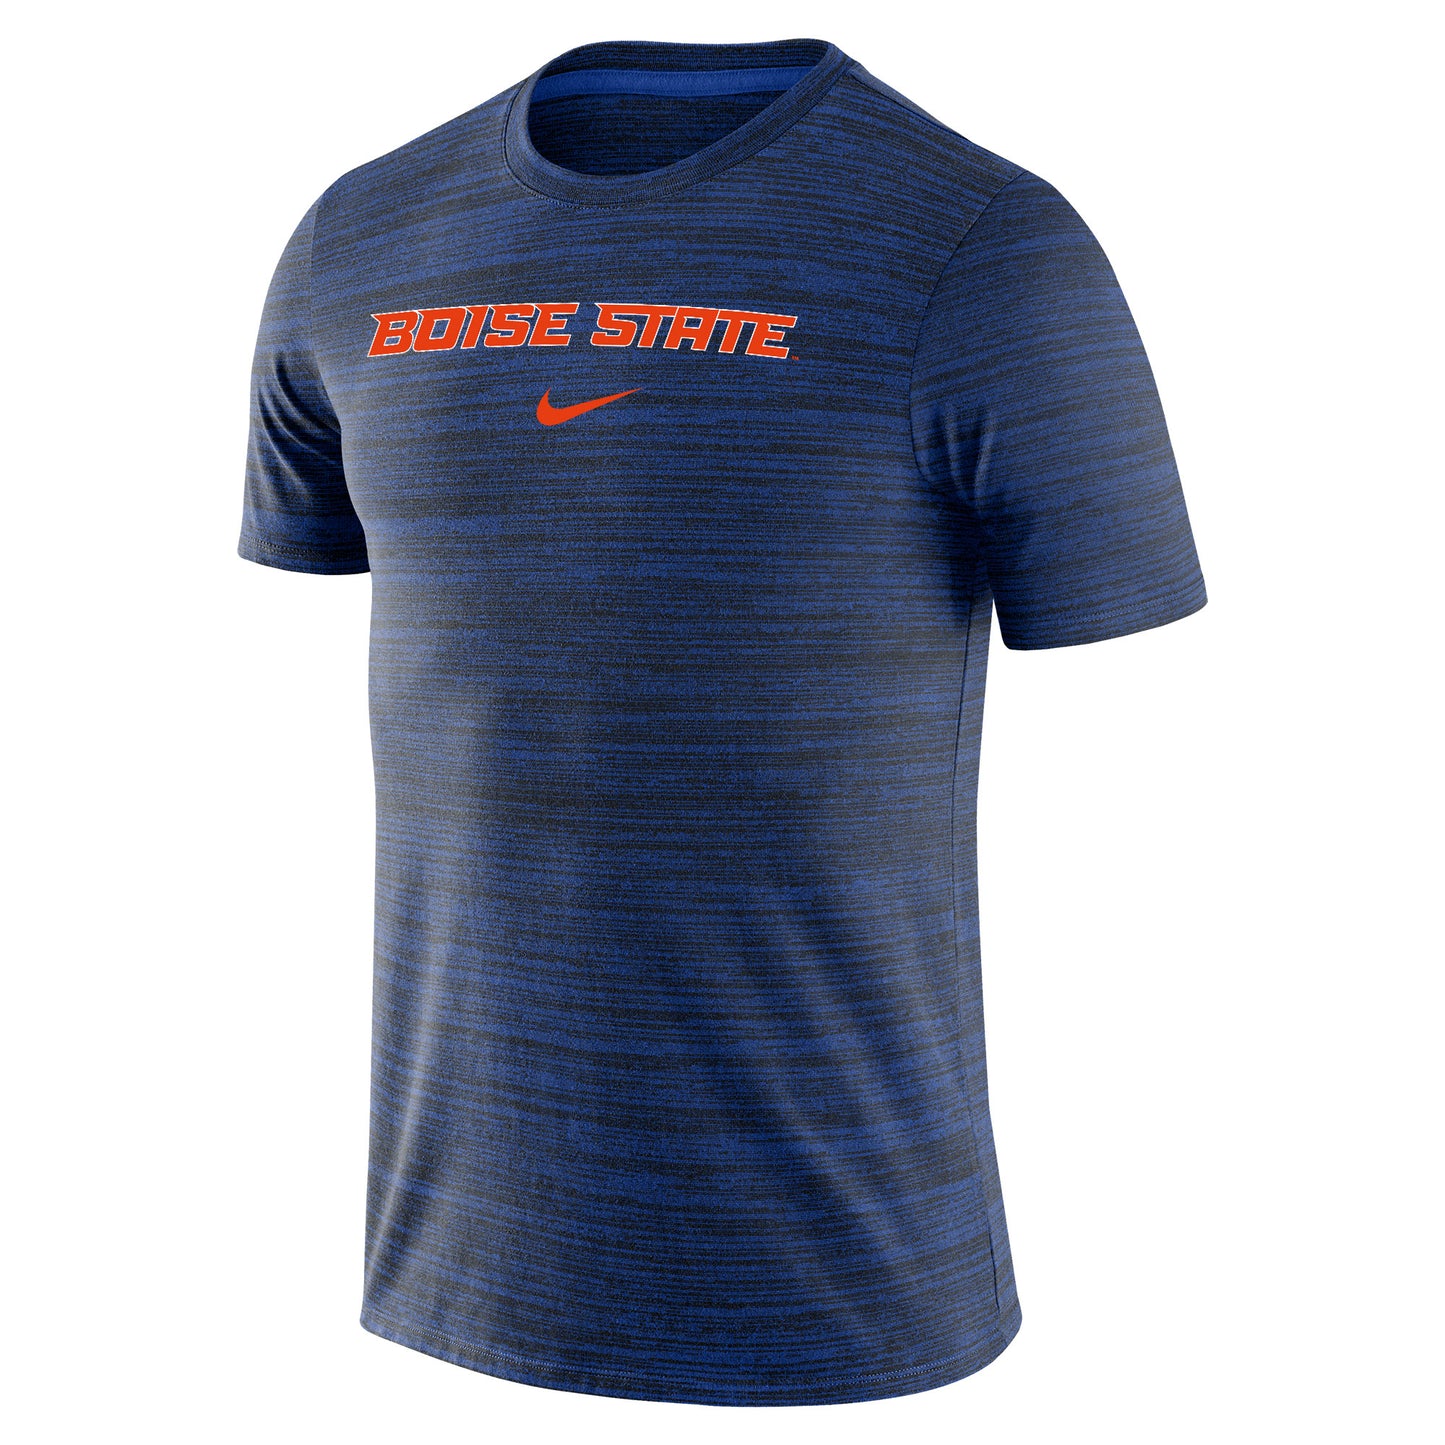 Boise State Broncos Nike Men's "Boise State" Velocity Dri-Fit T-Shirt (Blue)